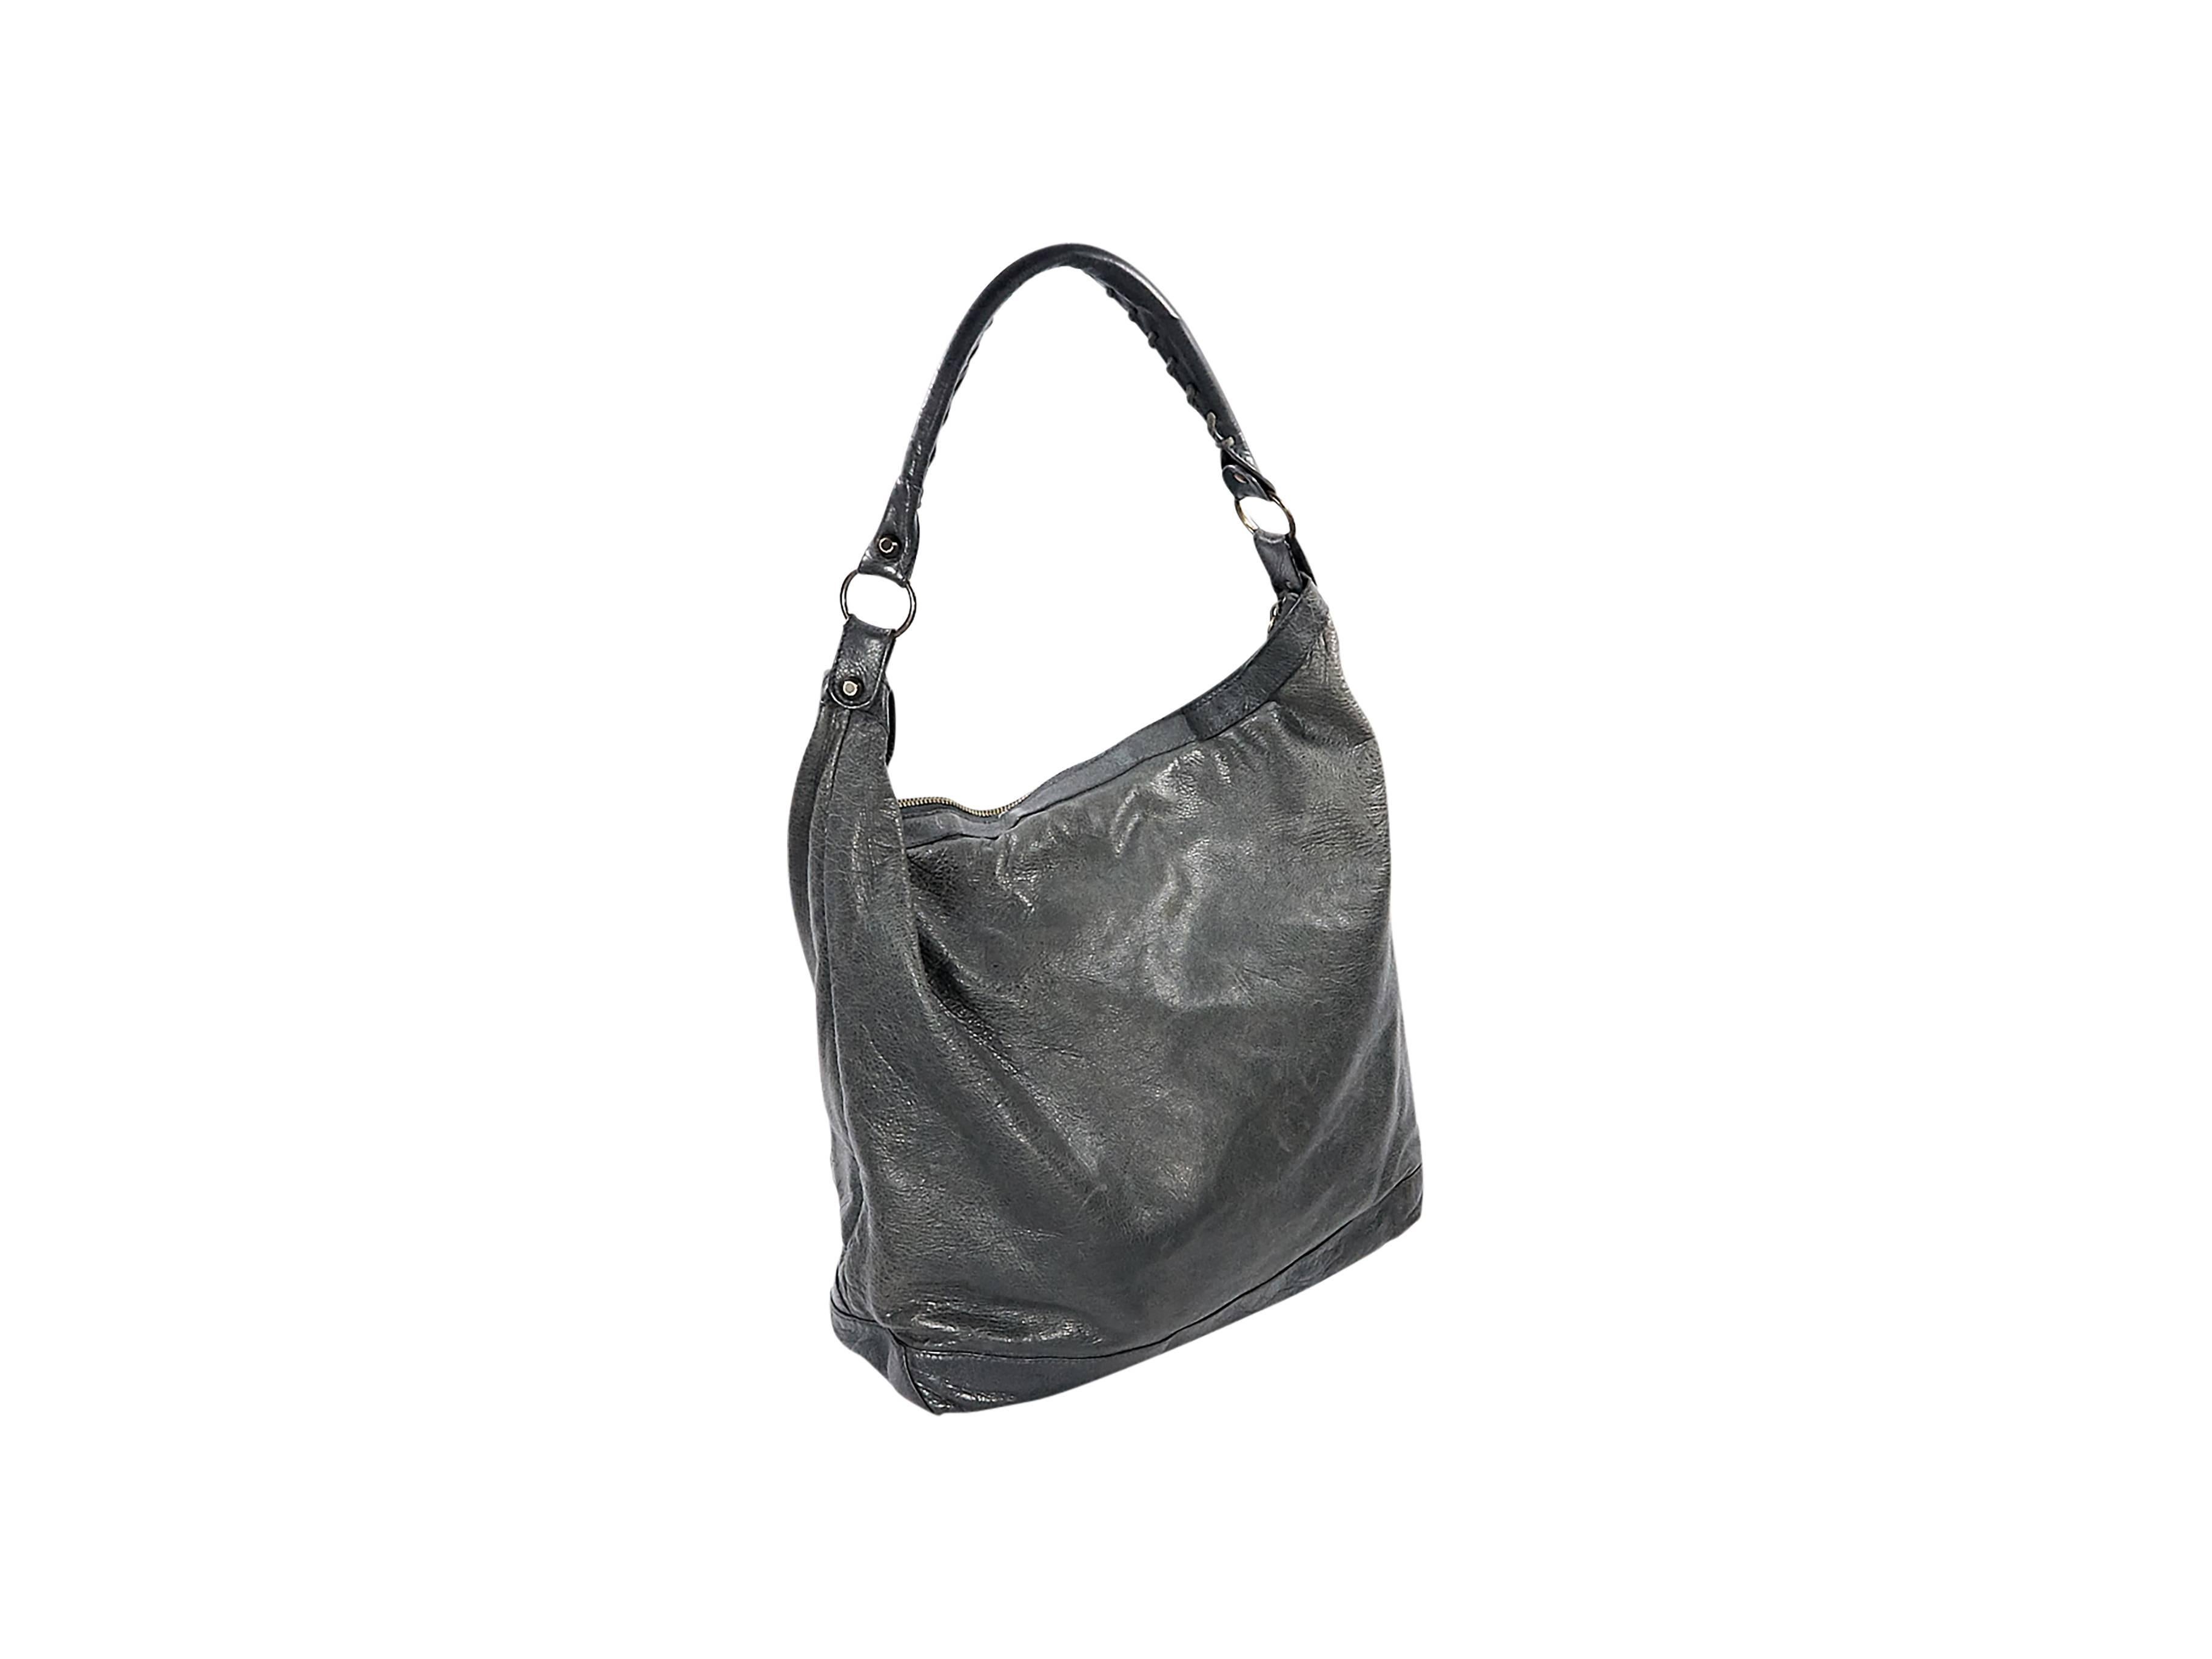 Product details:  Grey leather Moto shoulder bag by Balenciaga.  Single shoulder strap.  Top zip closure.  Lined interior with inner zip pocket.  Front exterior zip pocket.  Antiqued goldtone hardware.  13.75"L x 14"H x 5.5"D. 